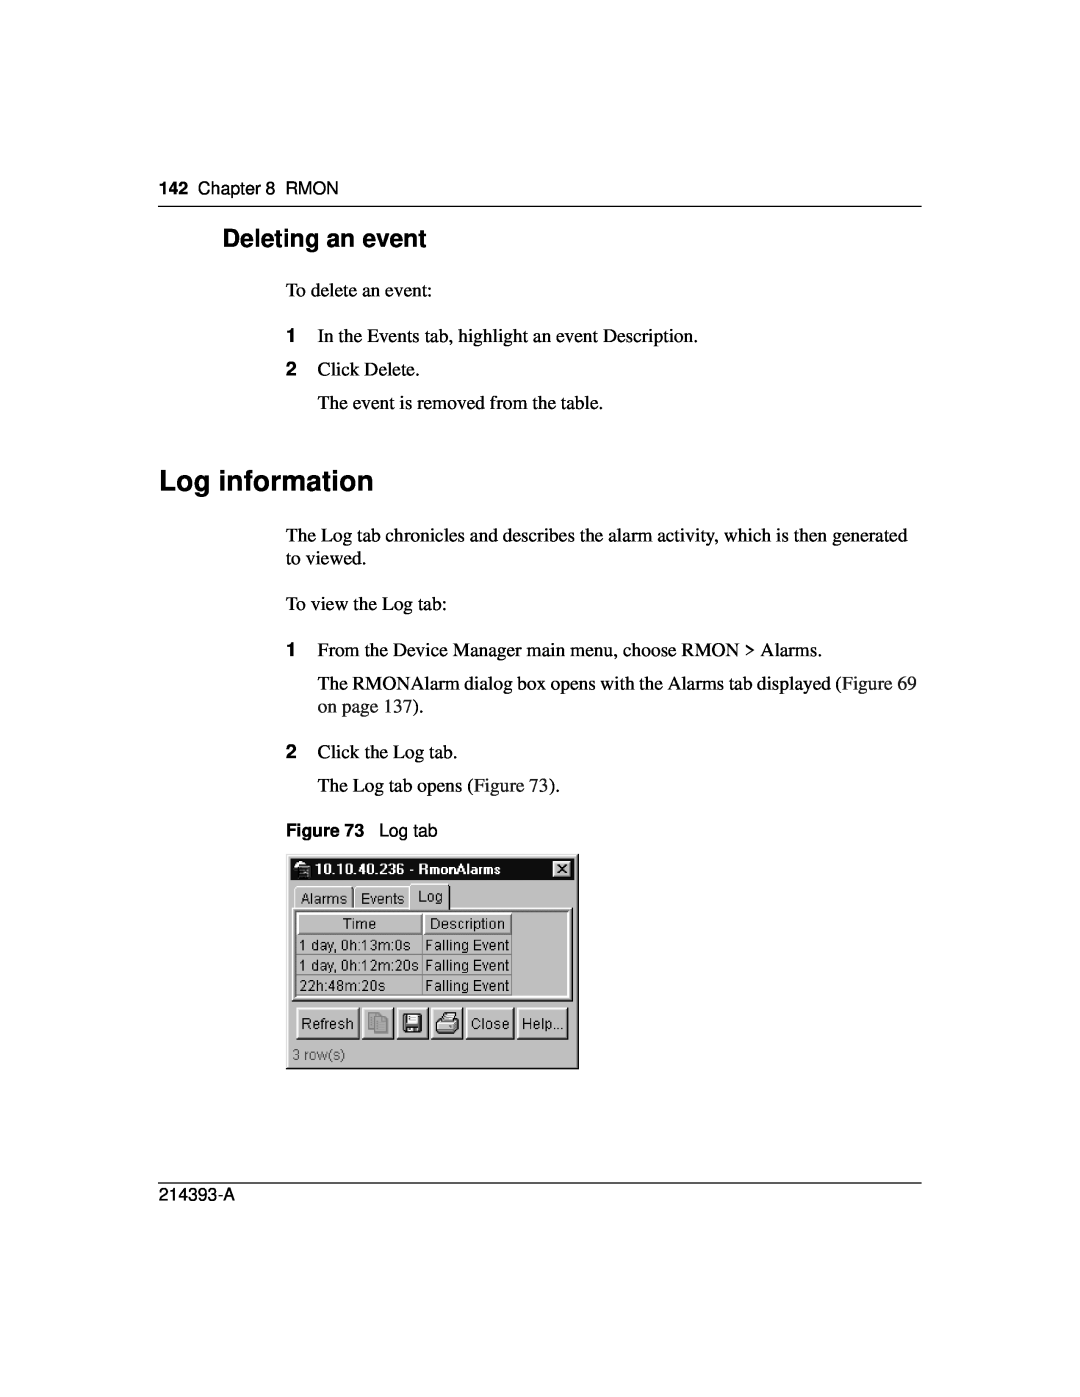 Nortel Networks 214393-A manual Log information, Deleting an event 